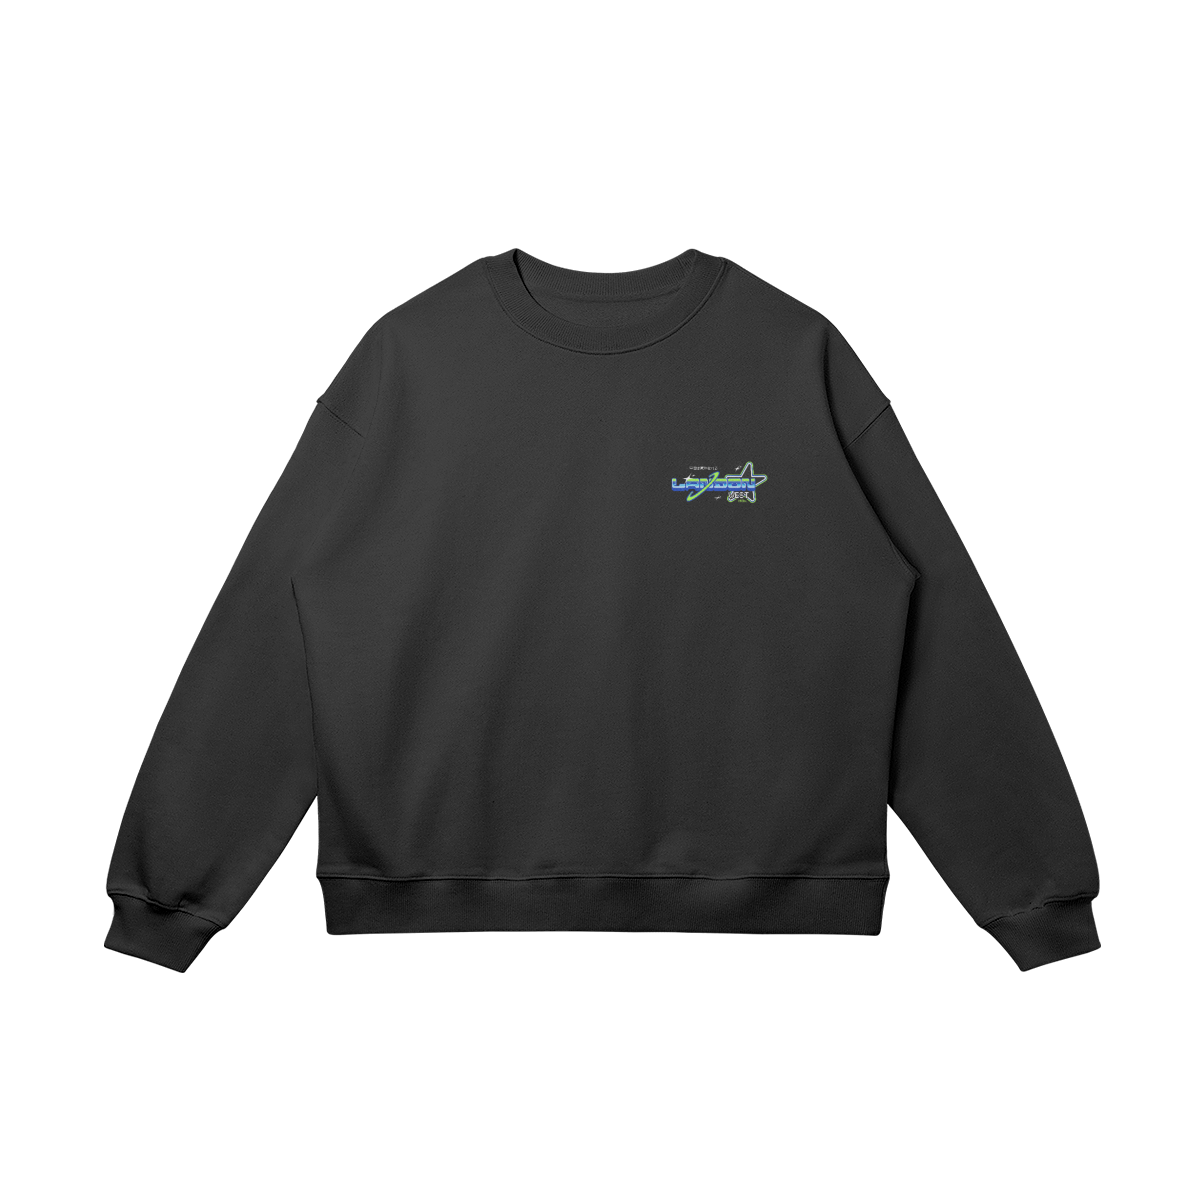 Landon West® Oversized Sweatshirt